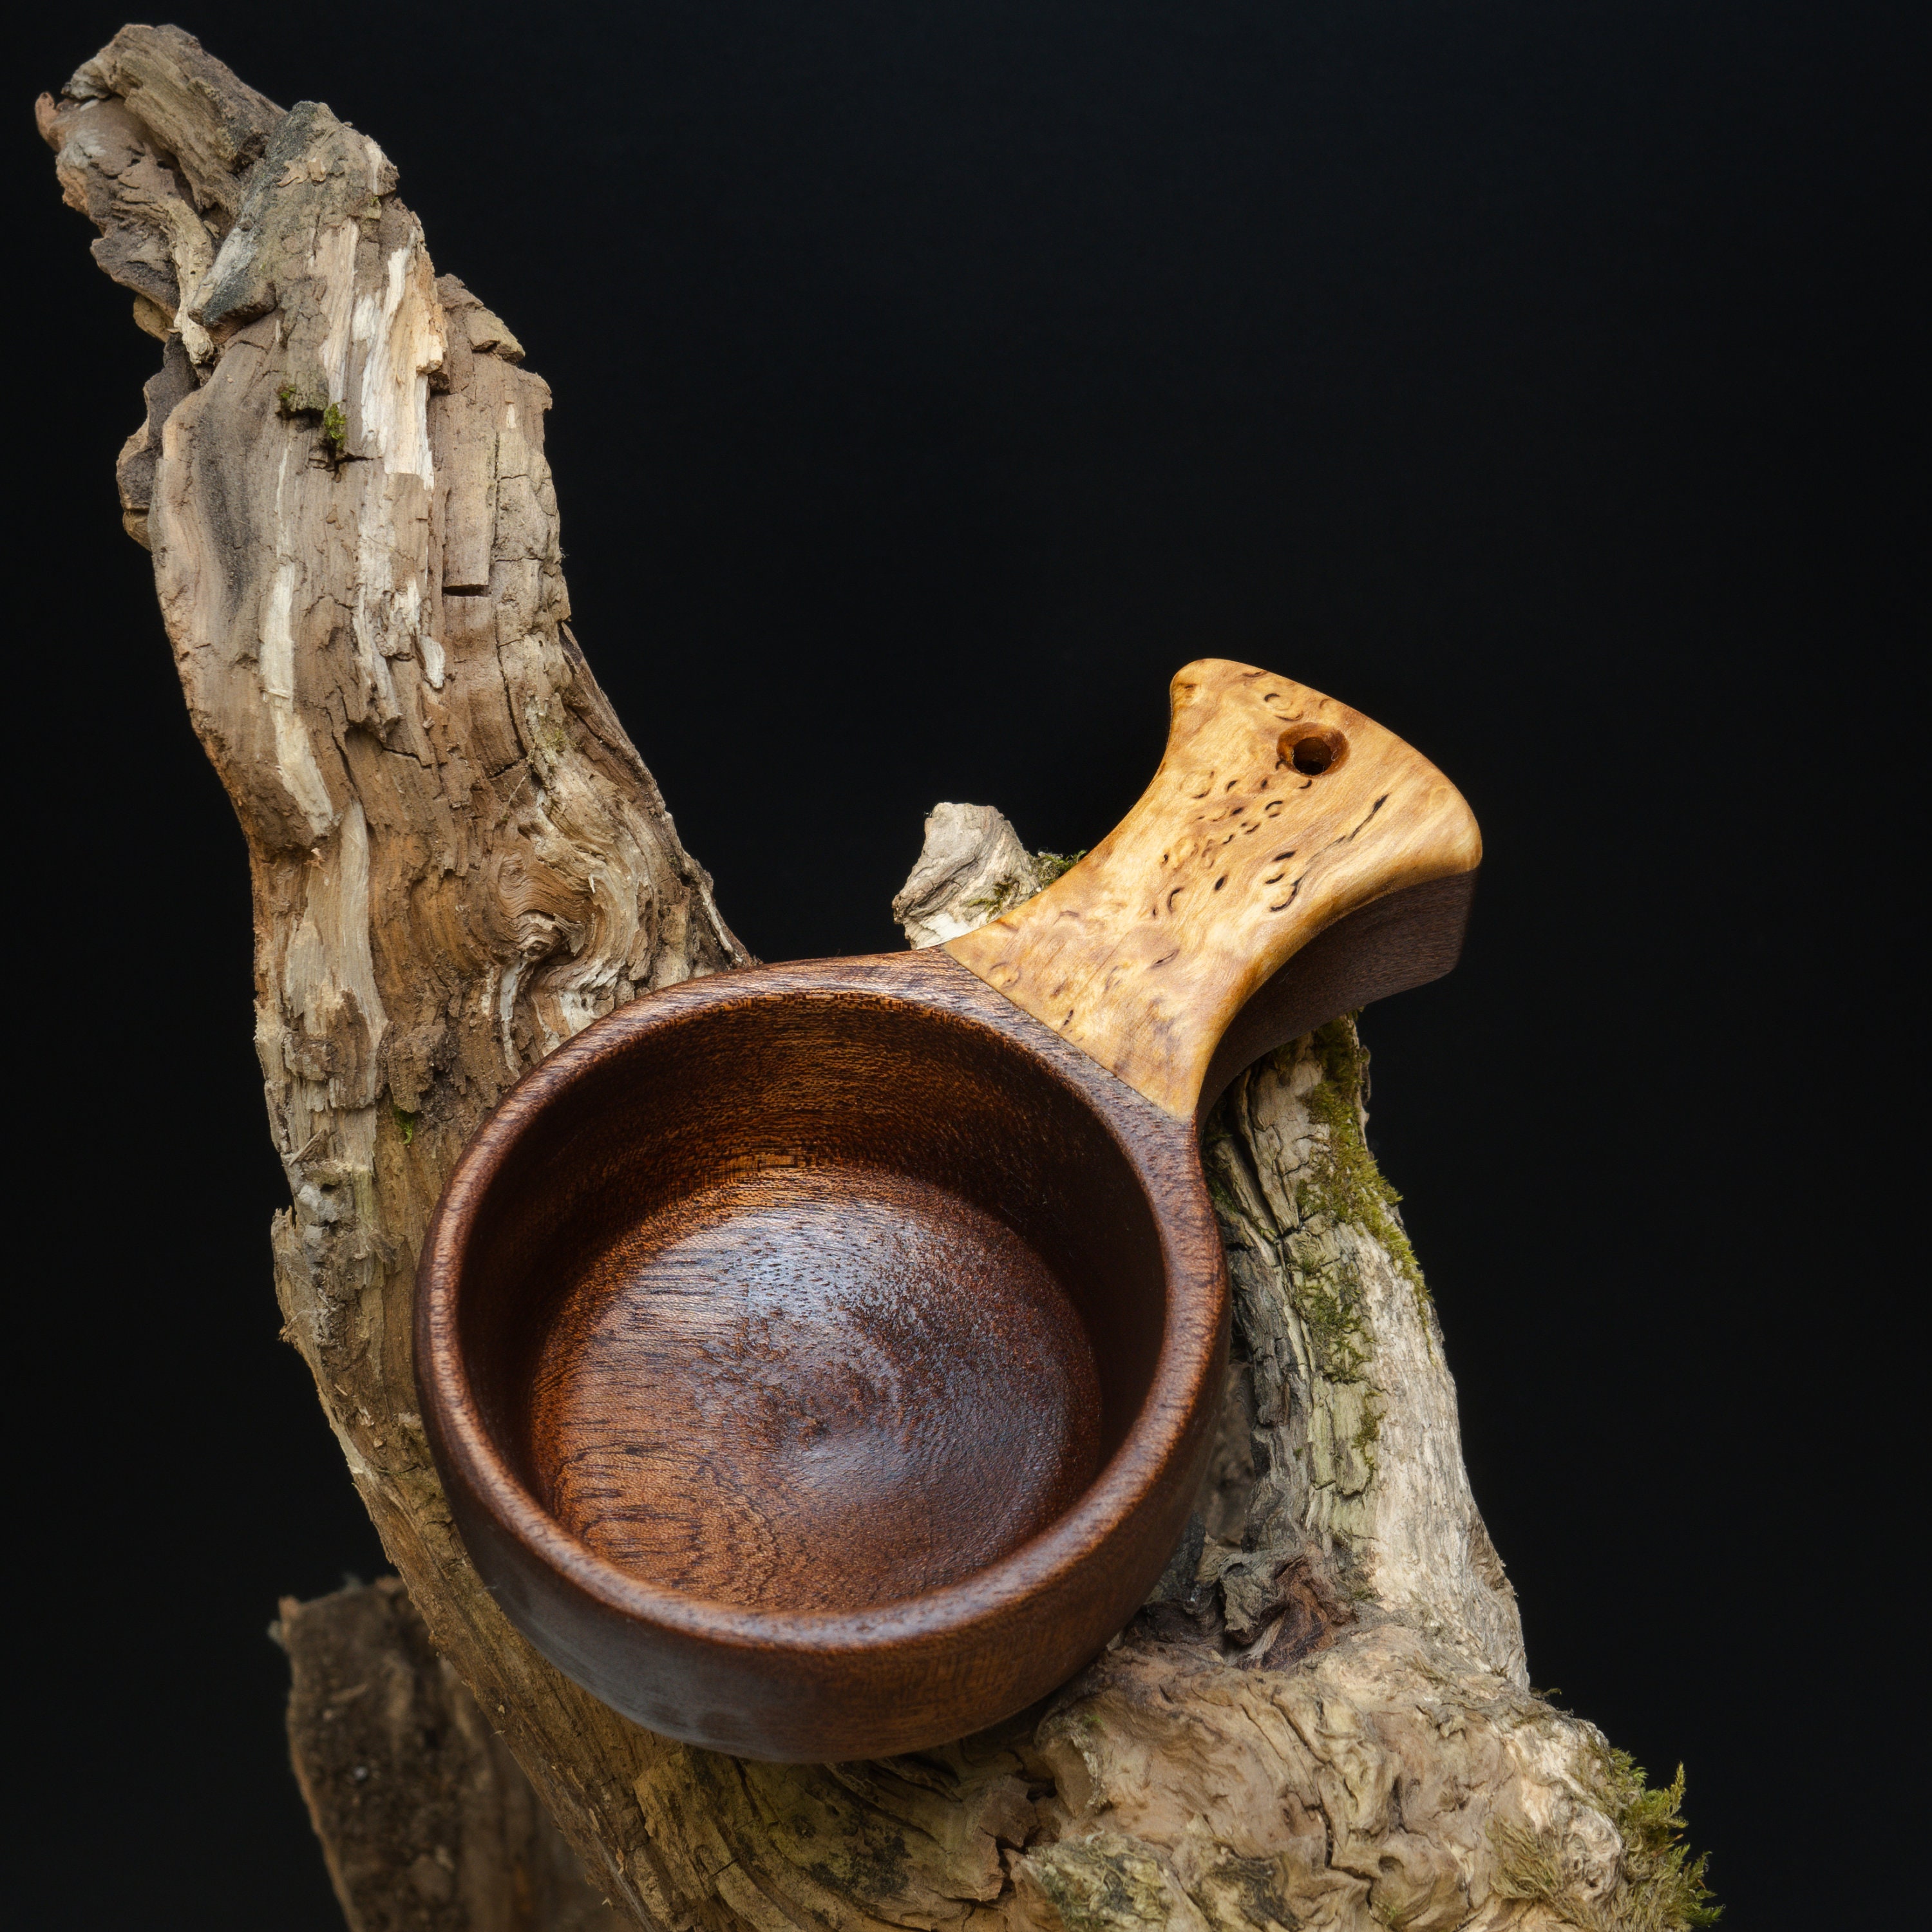 Handmade Wooden Cup Lapland Kuksa Tea Coffee Milk Drinking Mug Birthday  Gift